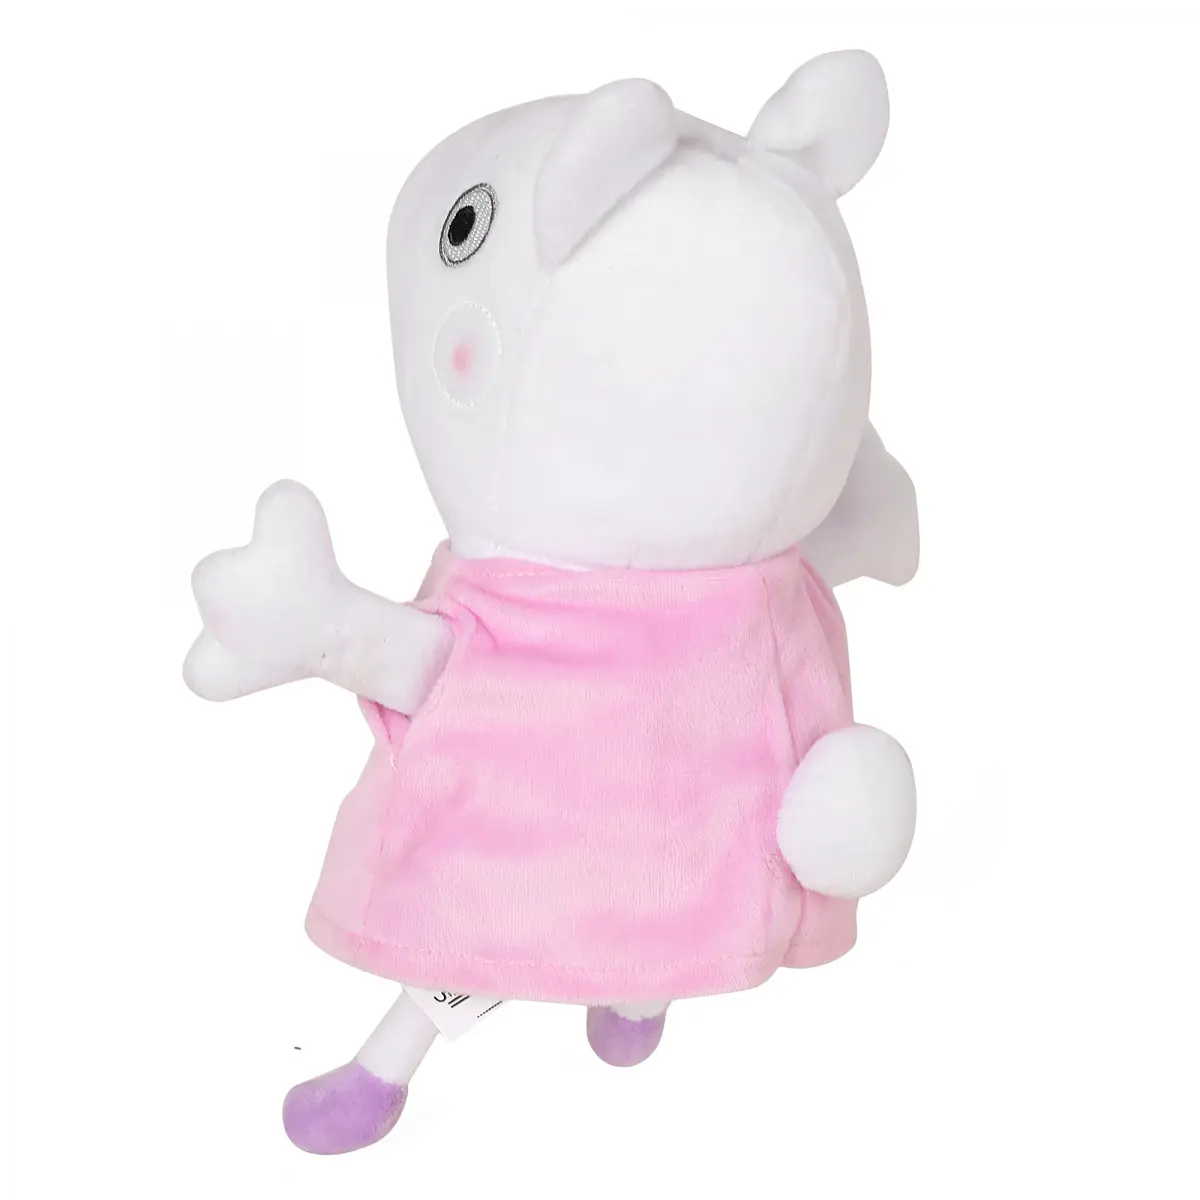 Peppa Pig Susie Sheep Soft Toy for Kids, 30cm, 18M+, White